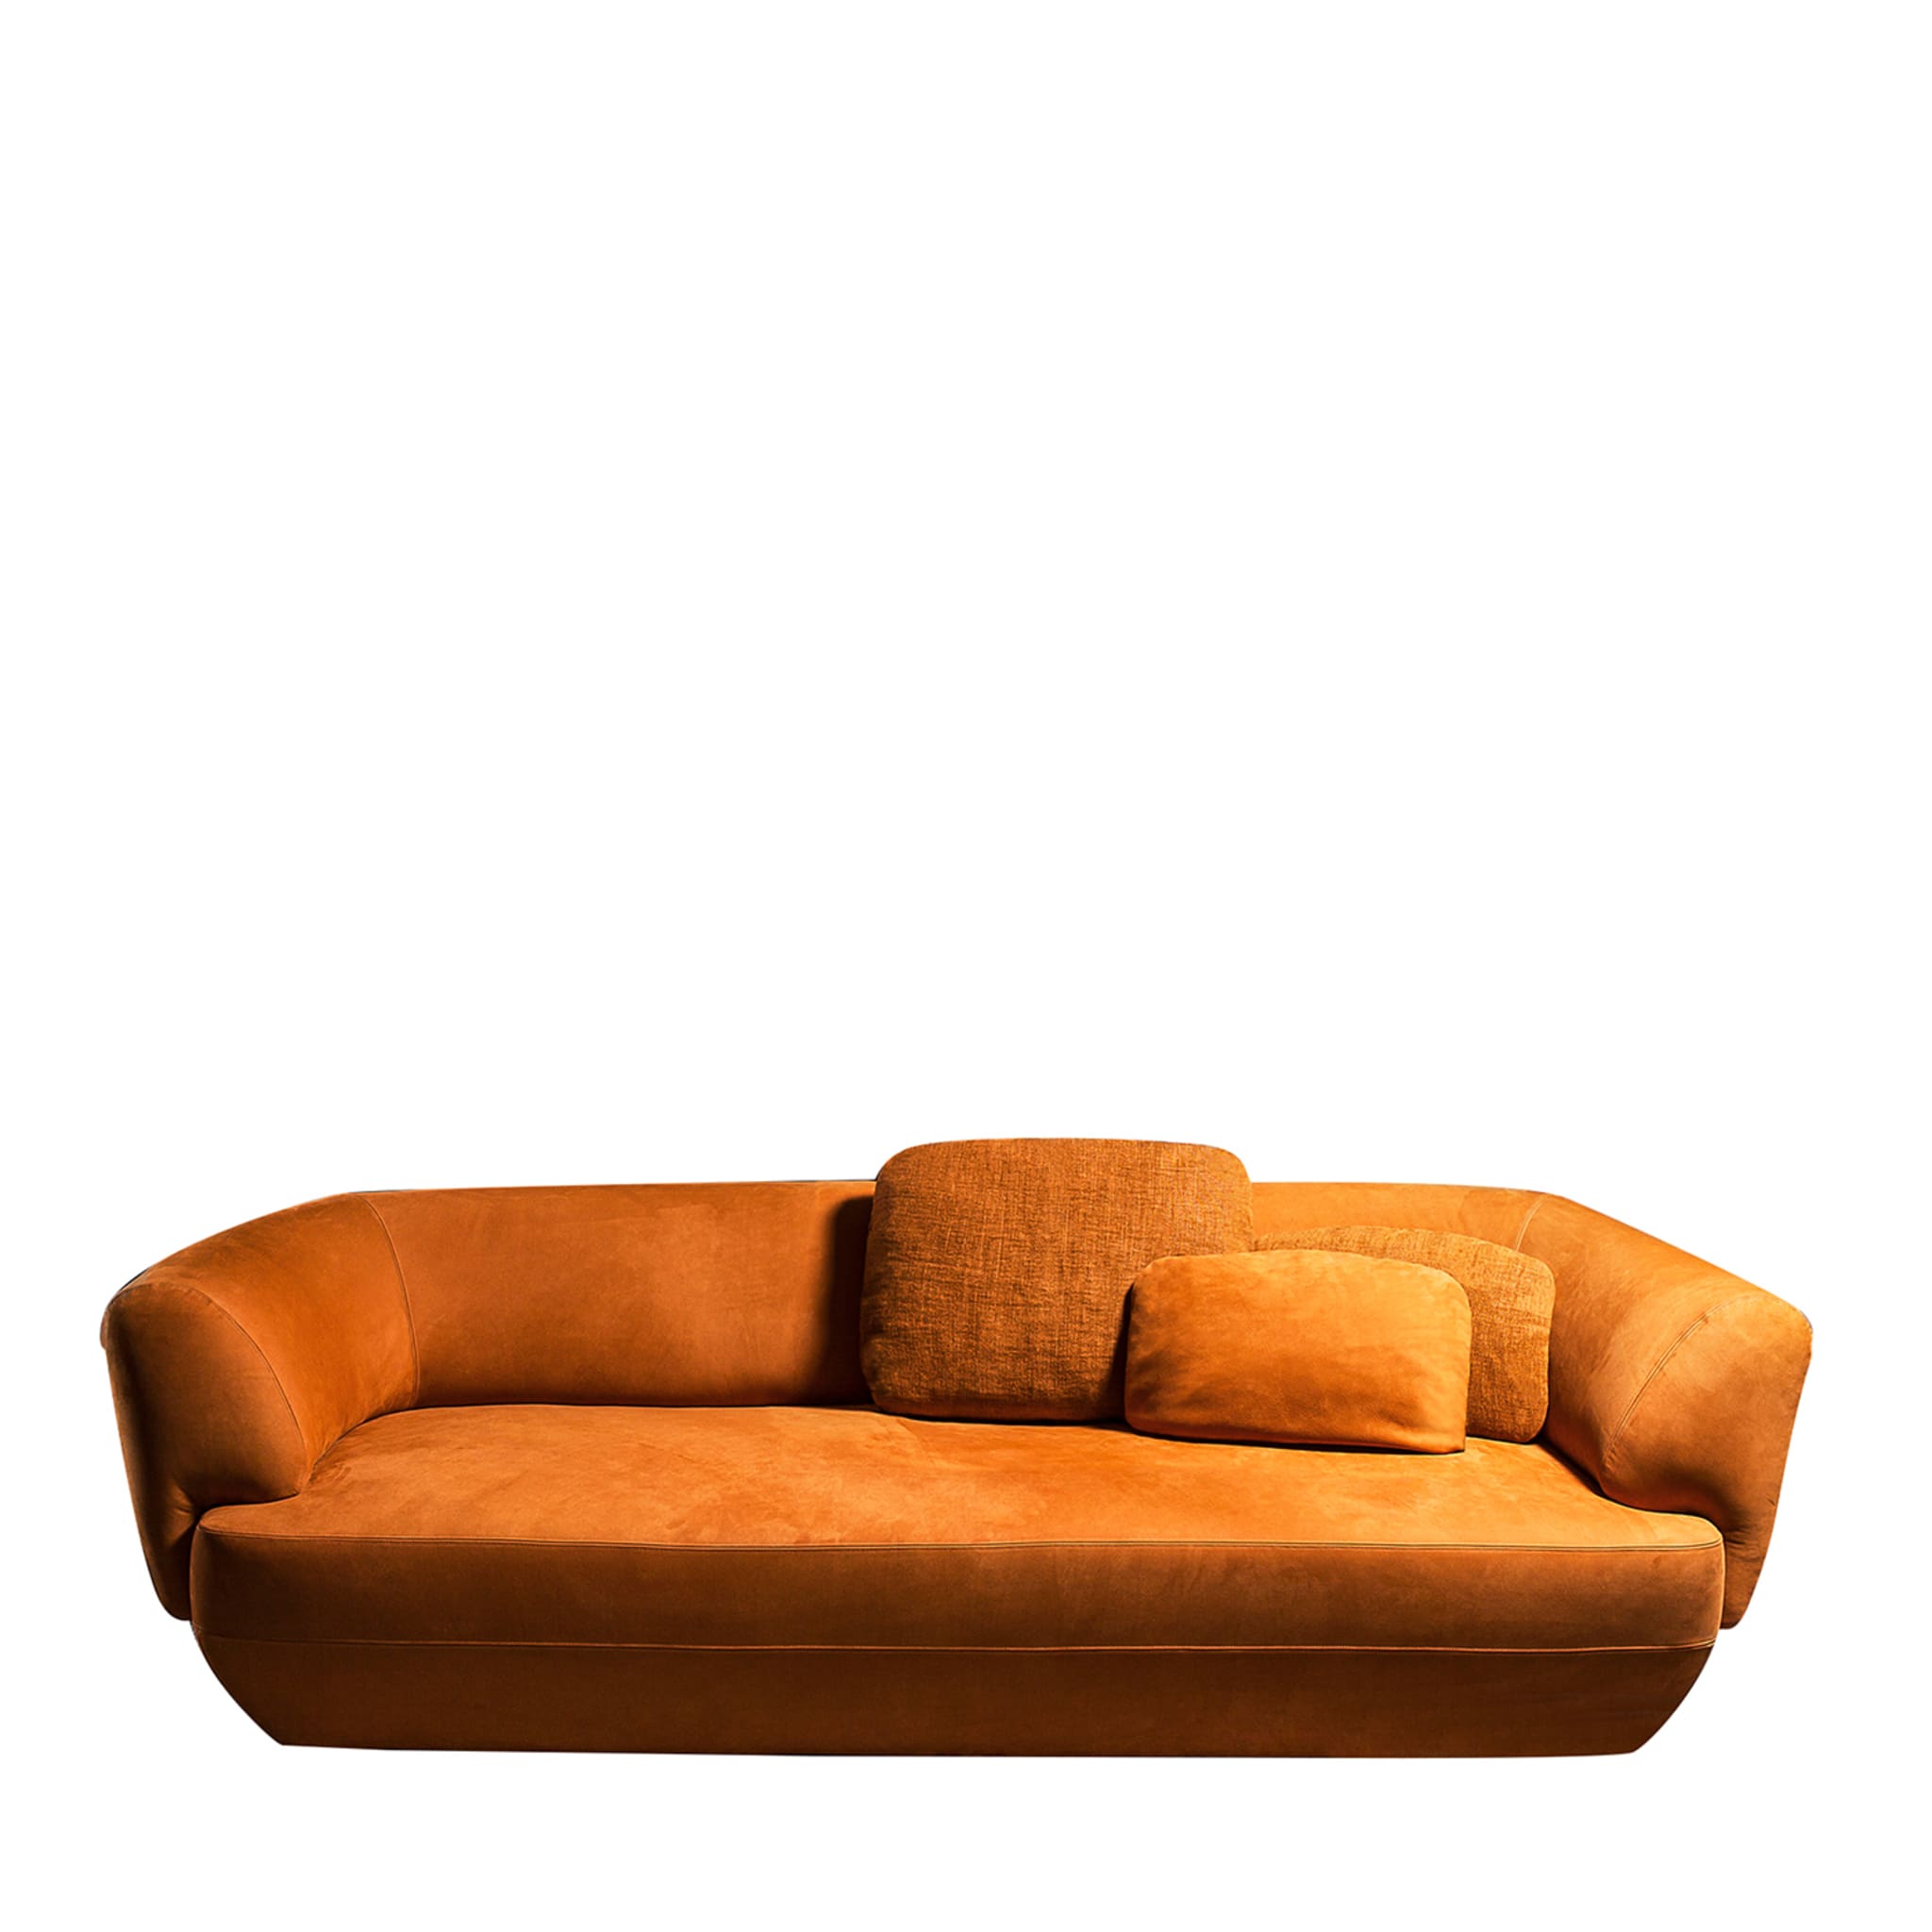 Selbstbewusstes 360 Orangefarbenes Sofa von Gianluigi Landoni - Hauptansicht